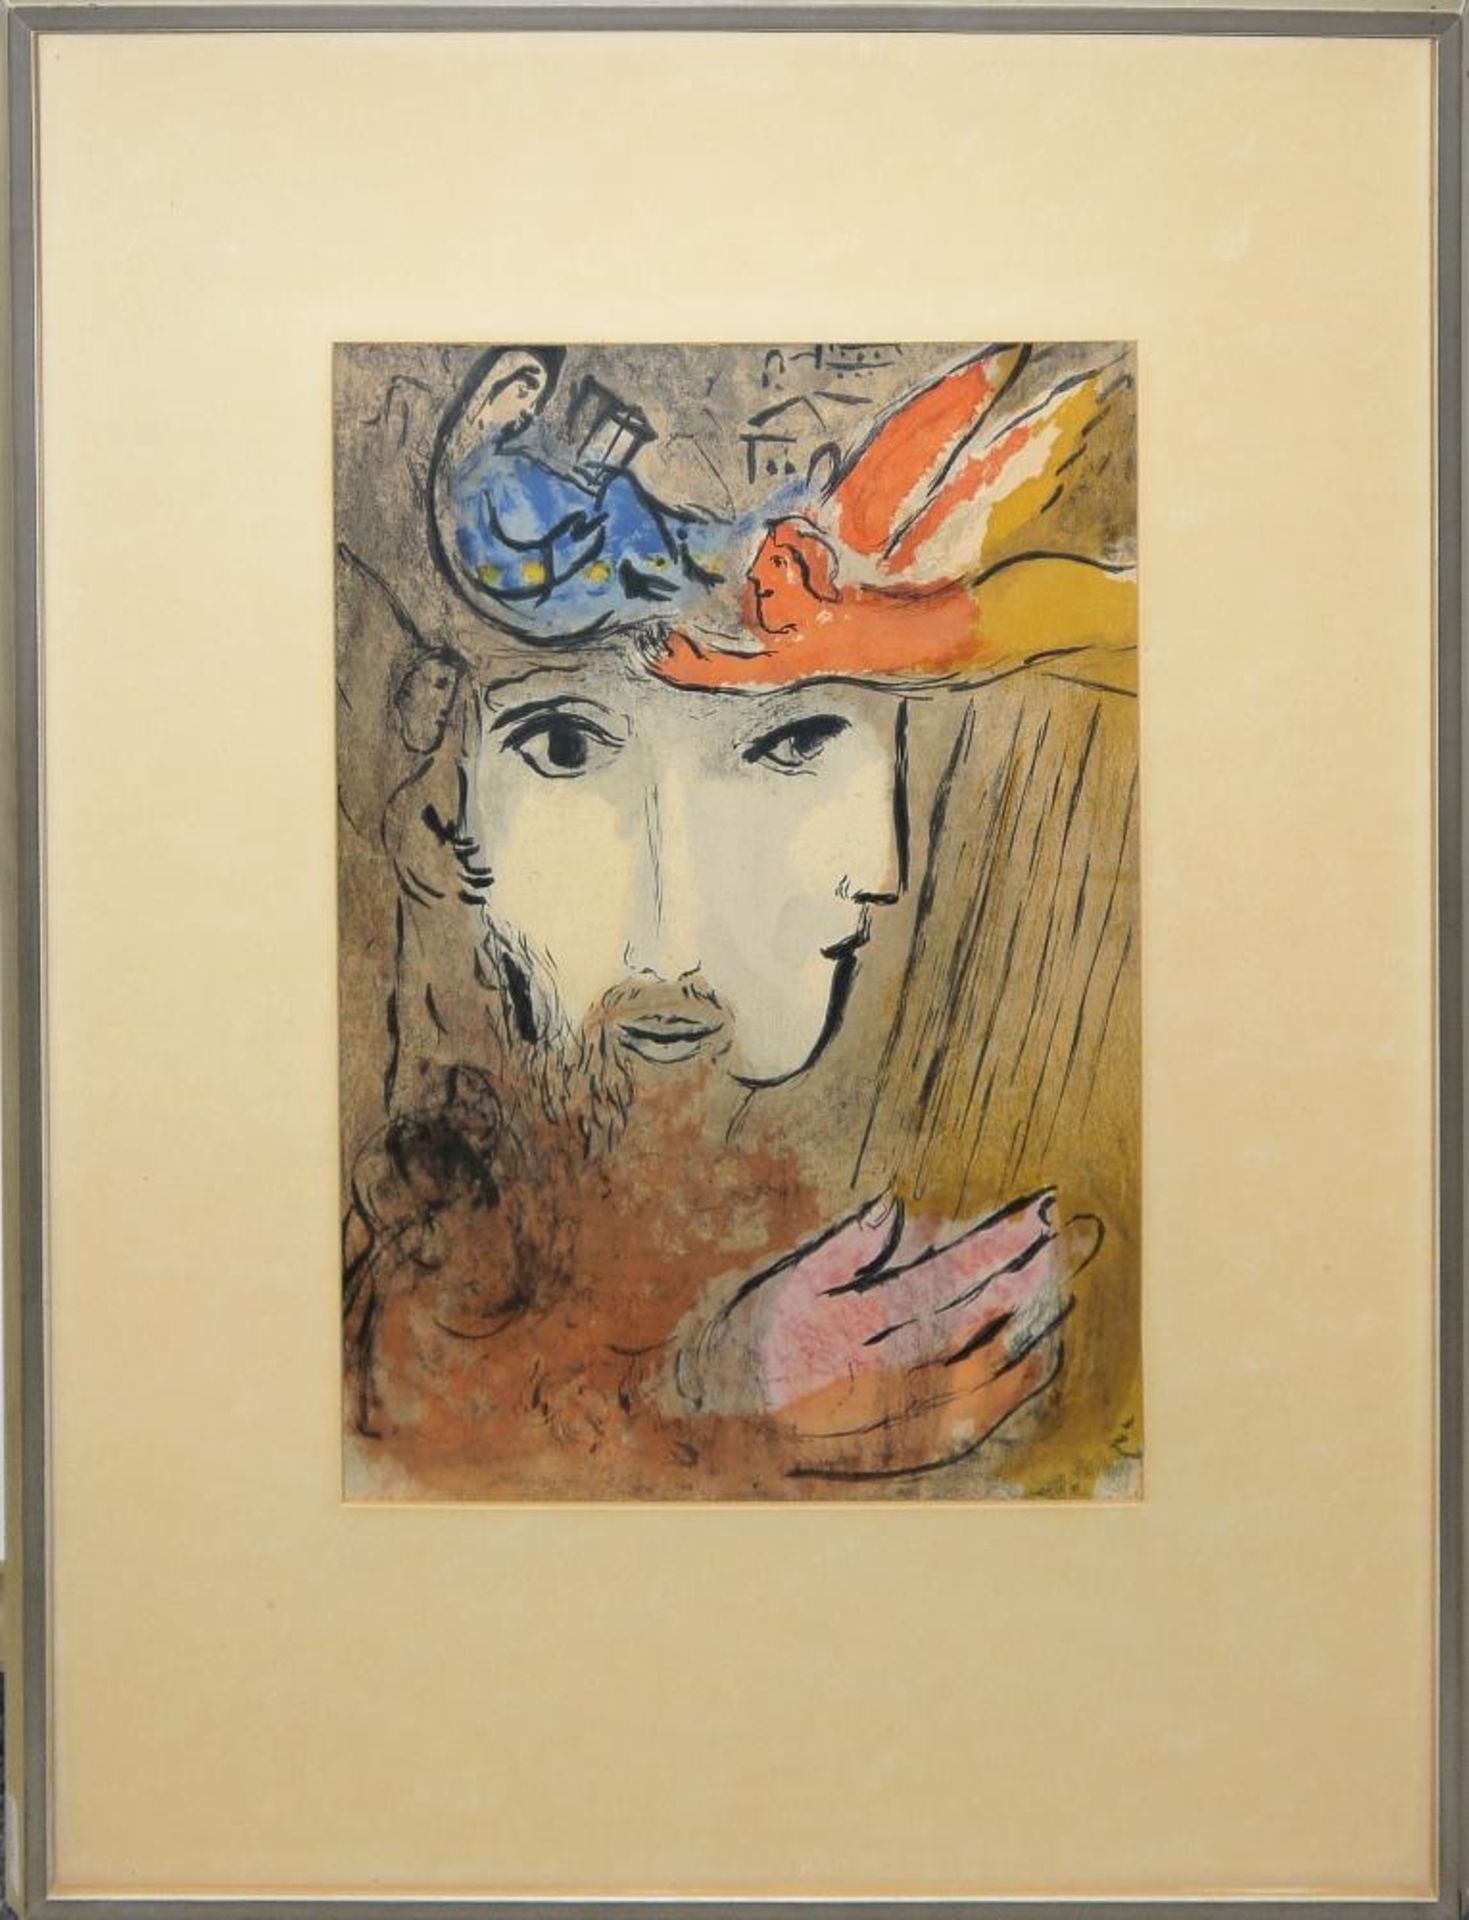 Marc Chagall, "David und Bathseba" aus Bibel I, Farblithographie von 1956, gerahmt Marc Chagall,